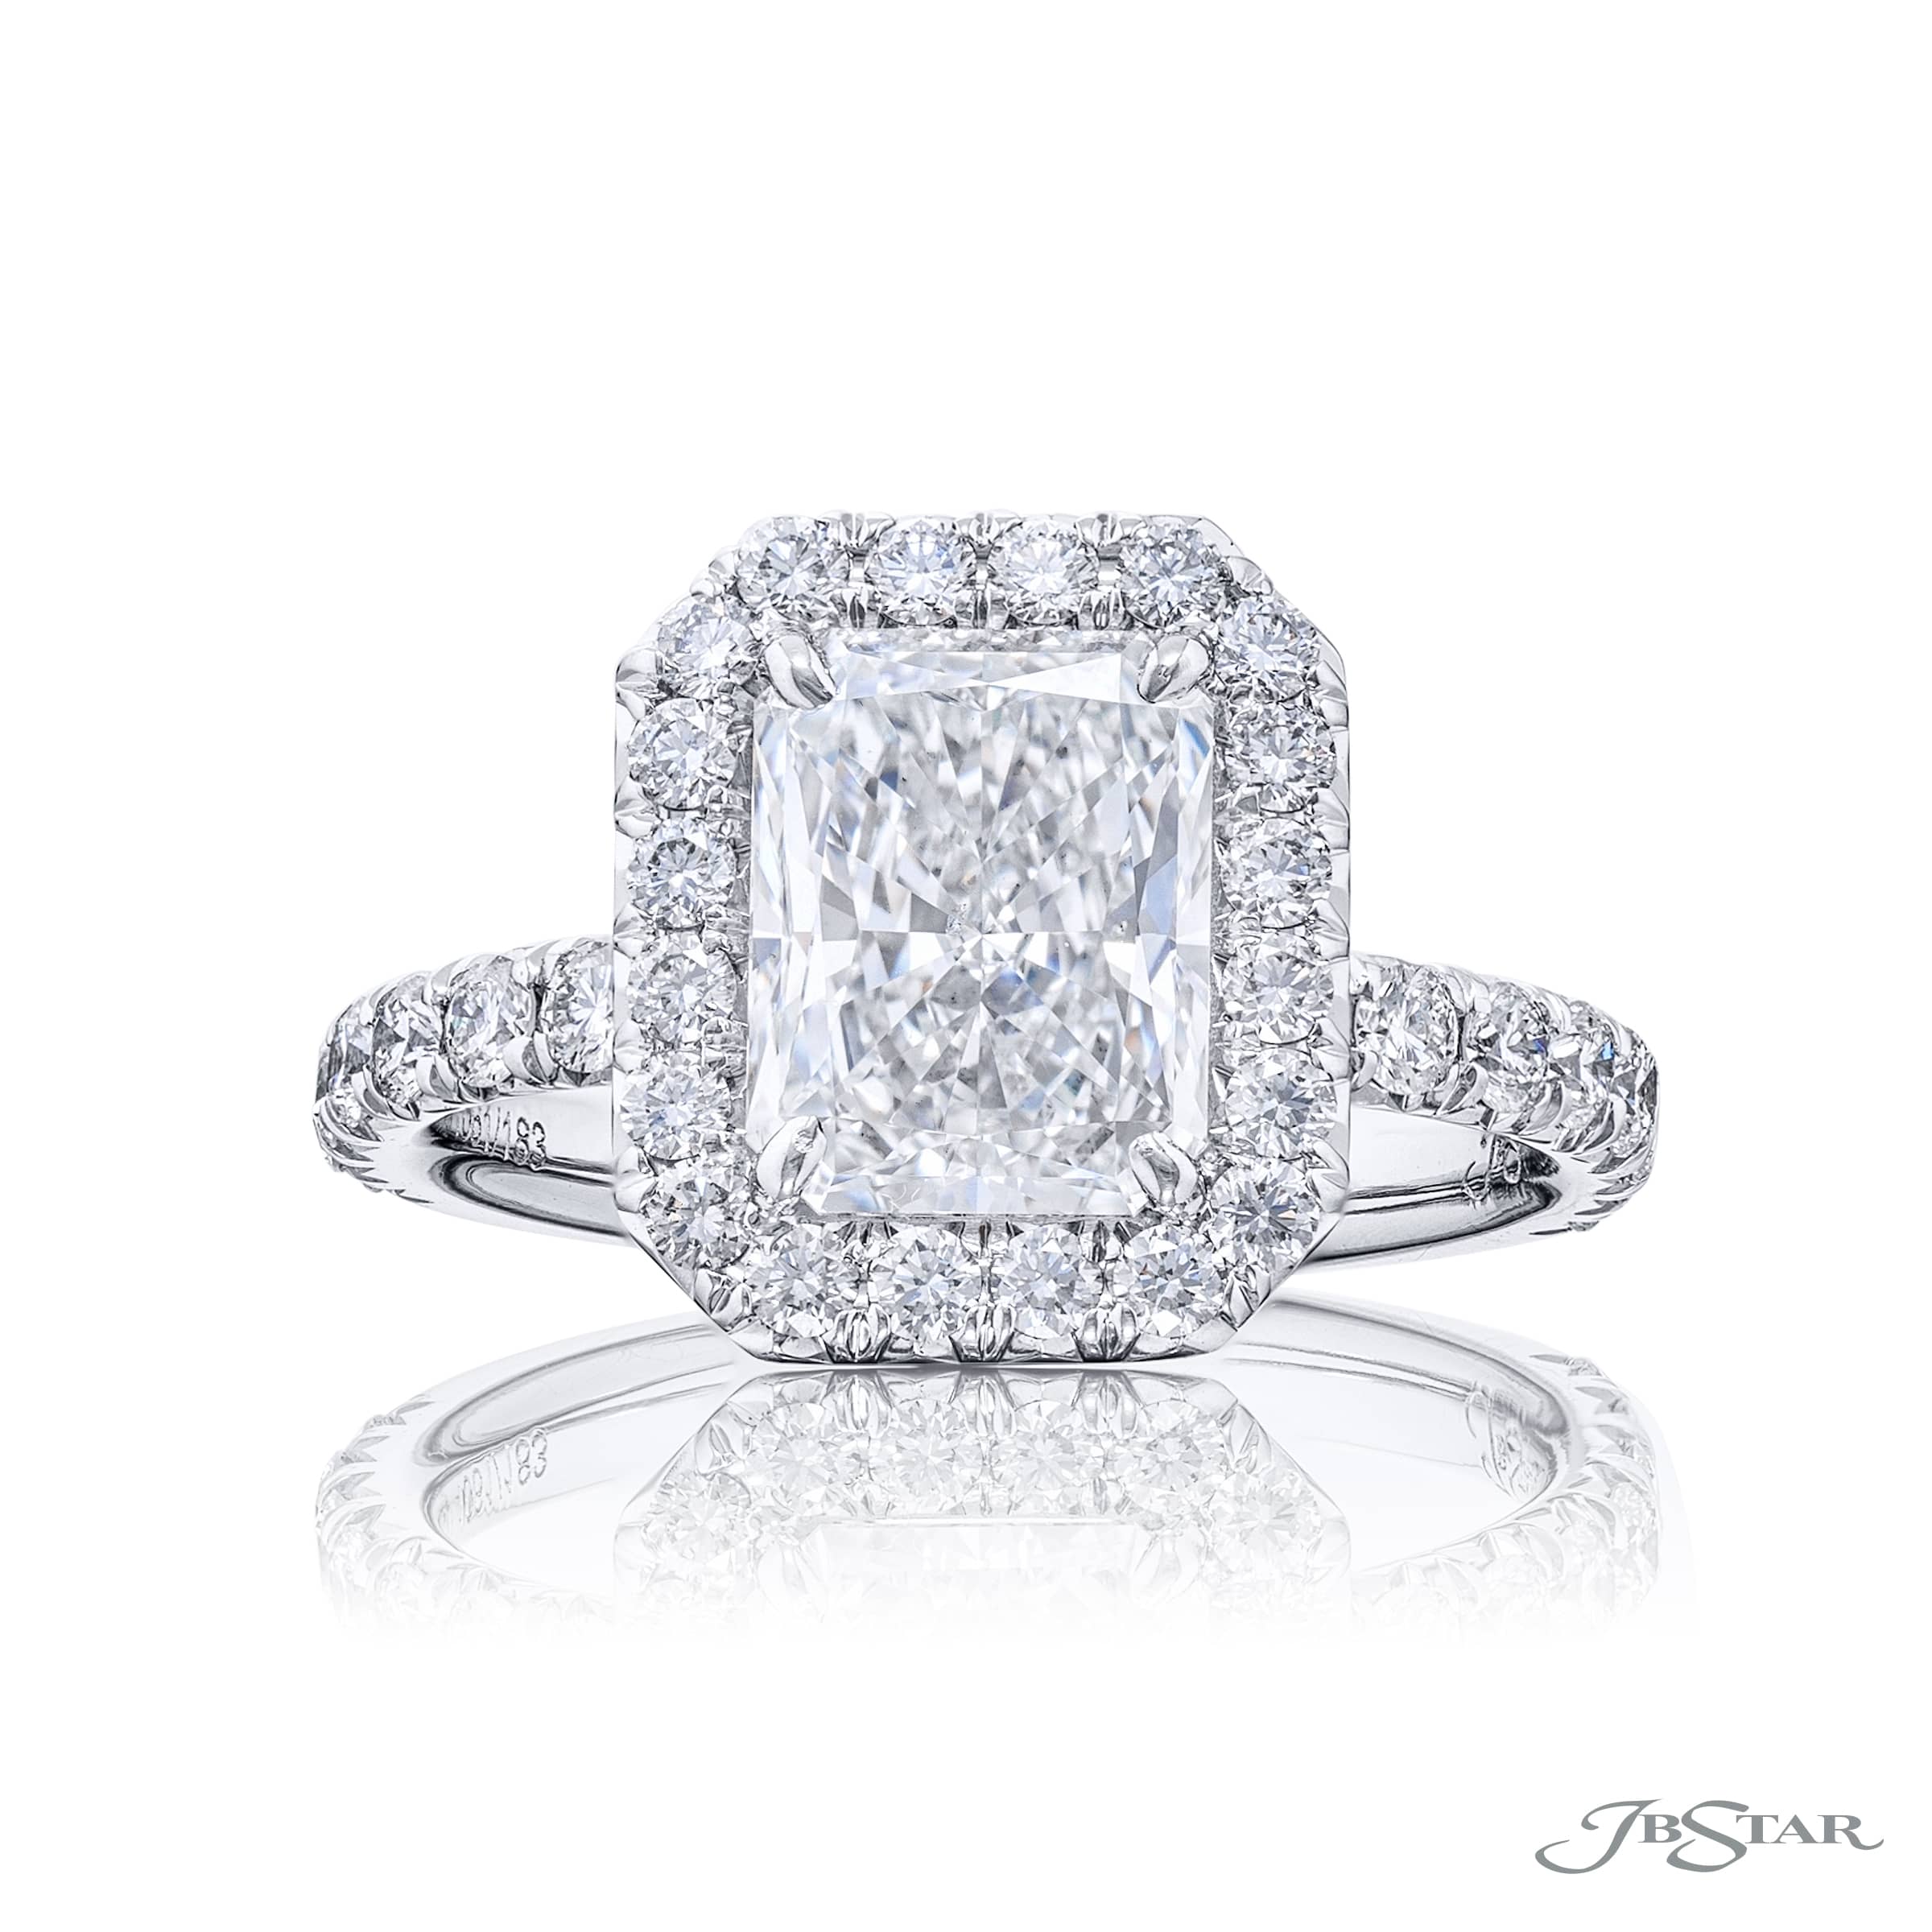 Diamond Engagement Ring 3.02ct. Cushion Cut Micro Pave – JB Star